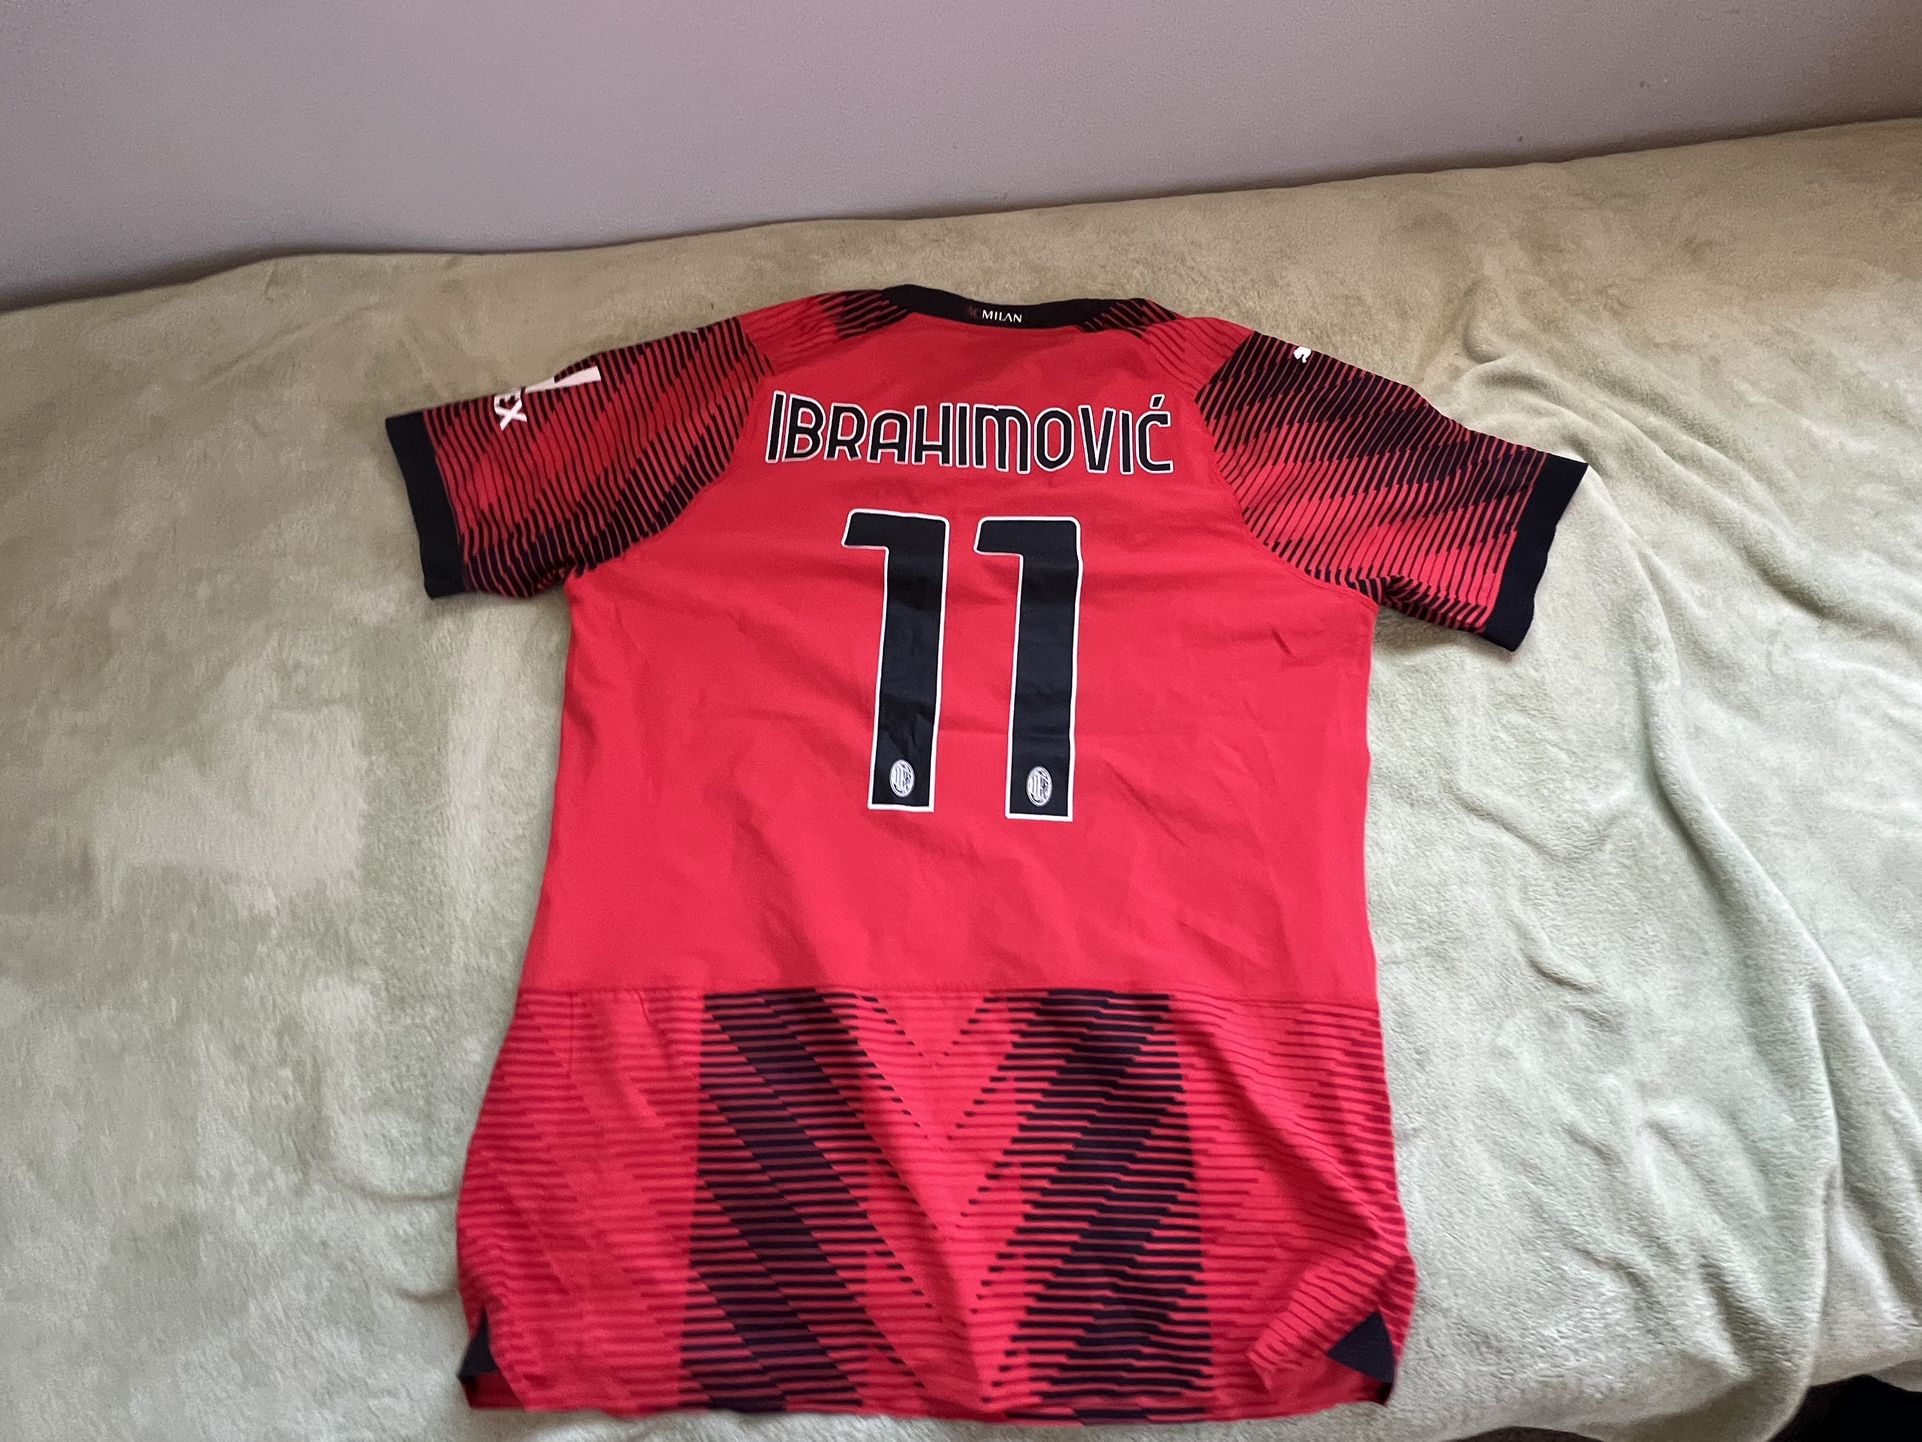 Zlatan Ibrahimovic AC Milan Shirt Size: XXL